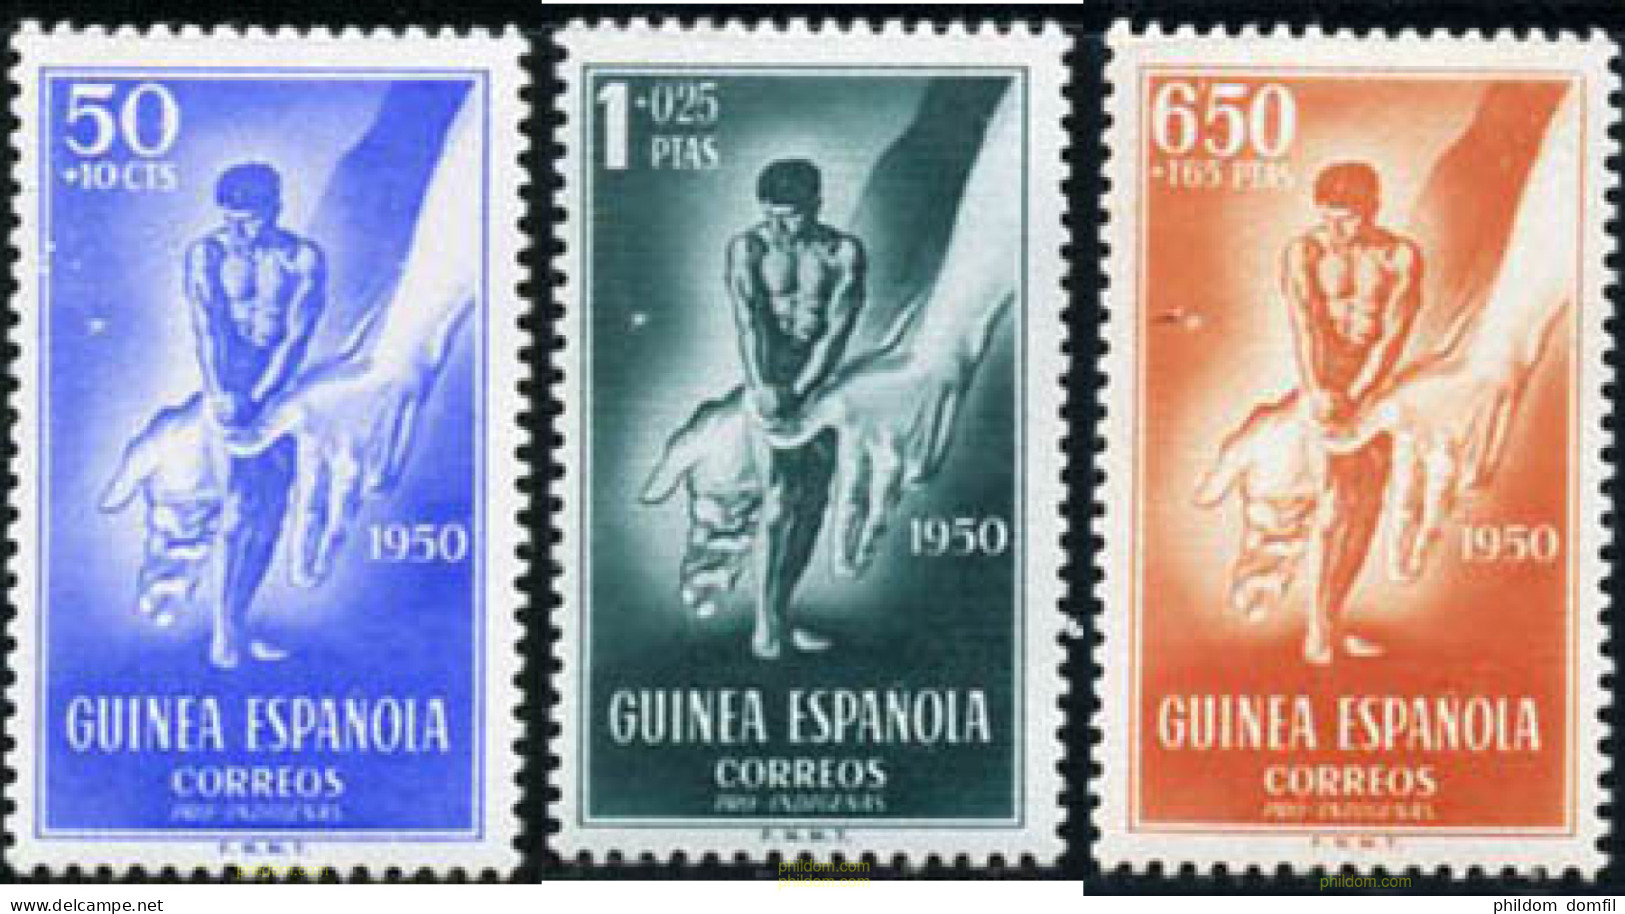 198490 MNH GUINEA ESPAÑOLA 1950 PRO INDIGENAS - Spanish Guinea